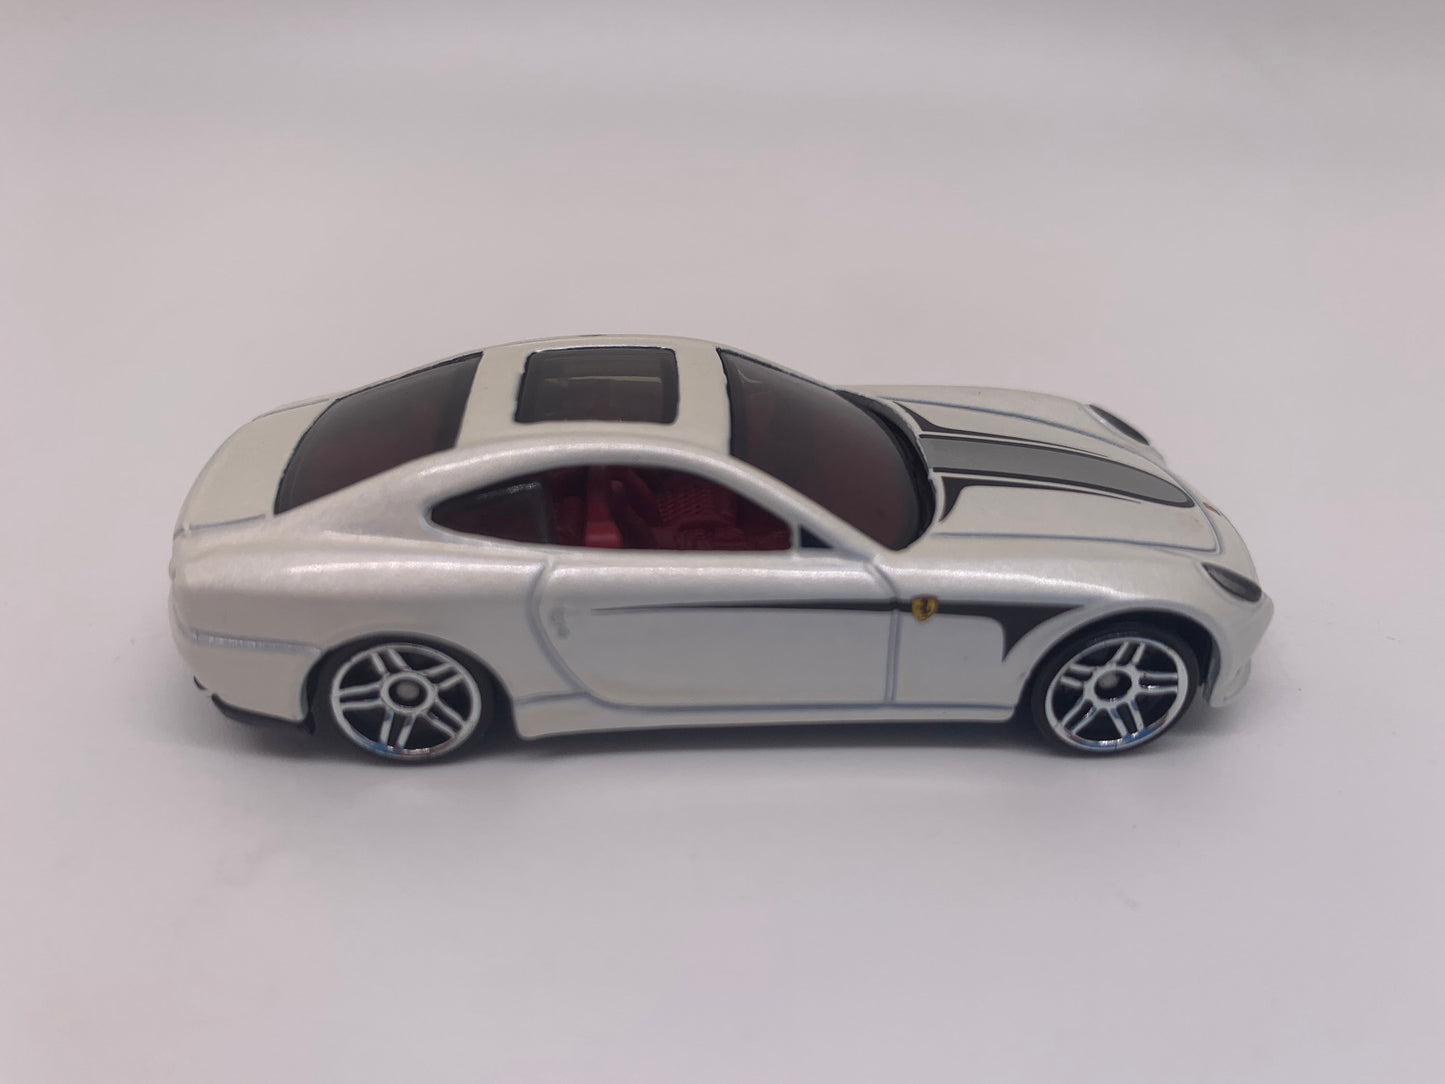 Hot Wheels Ferrari 612 Scaglietti Pearl White Perfect Birthday Gift Miniature Collectible Scale Model Toy Car